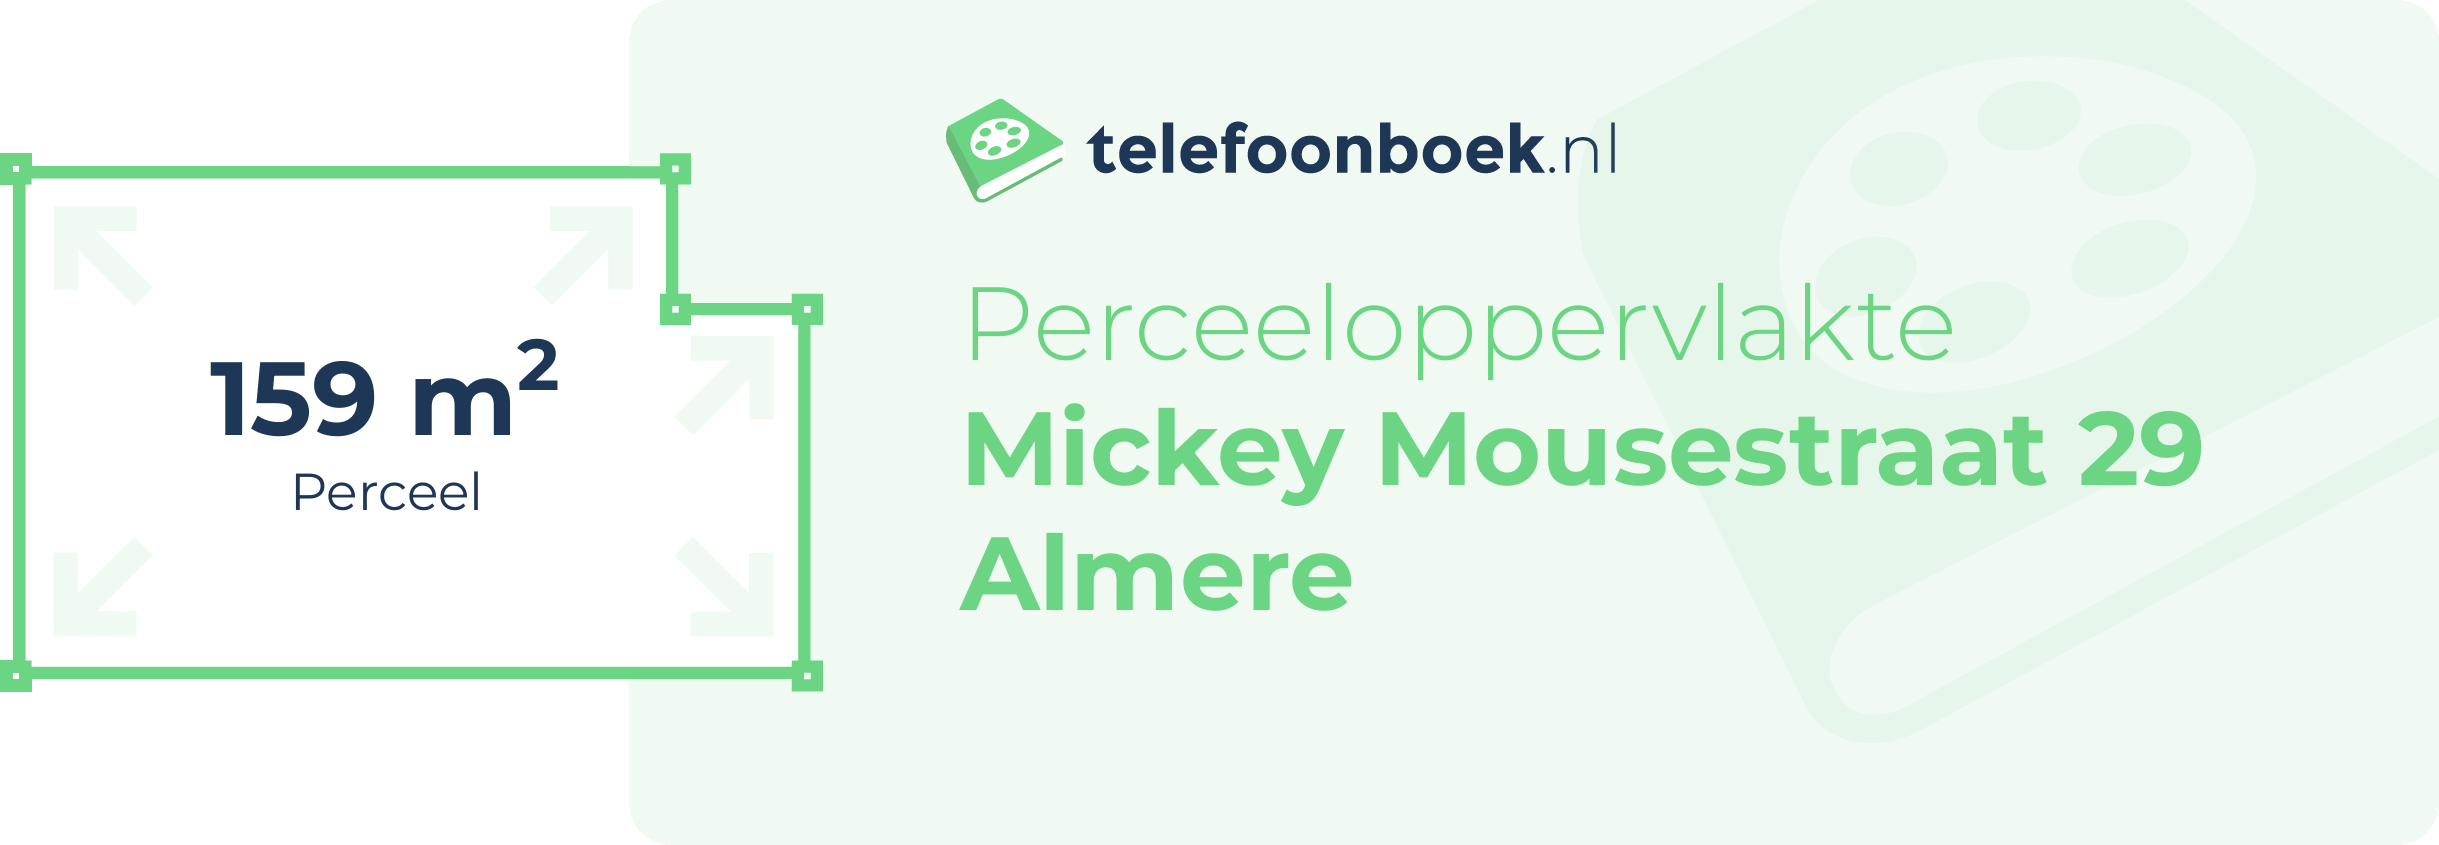 Perceeloppervlakte Mickey Mousestraat 29 Almere